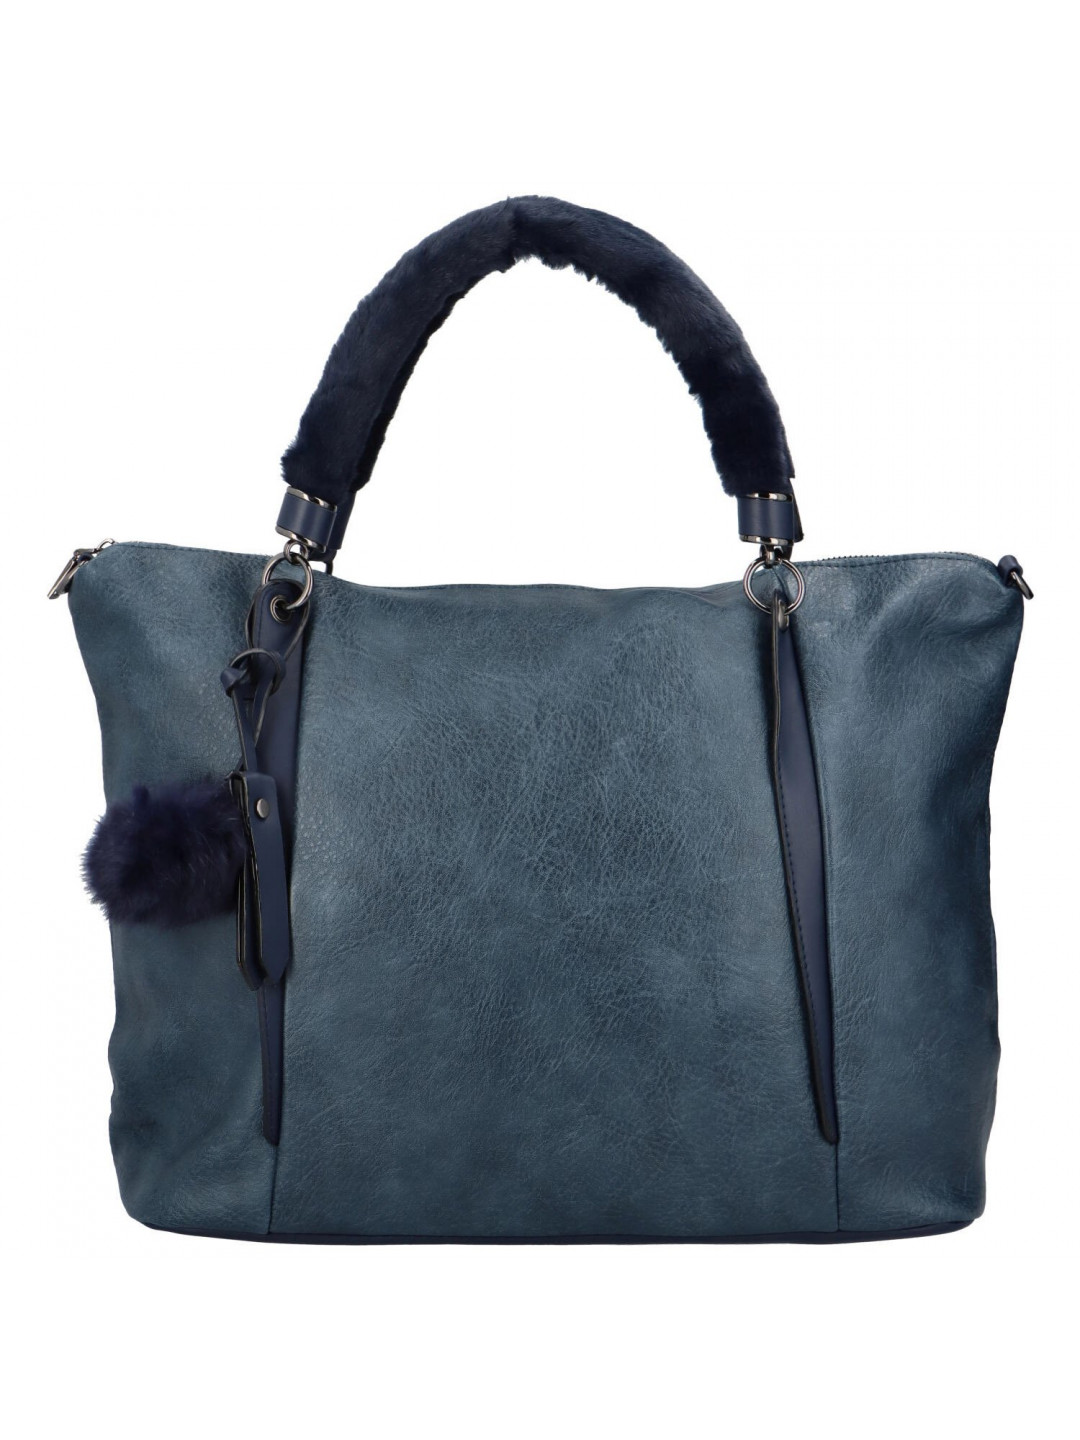 Designová dámská koženková kabelka Claire modrá